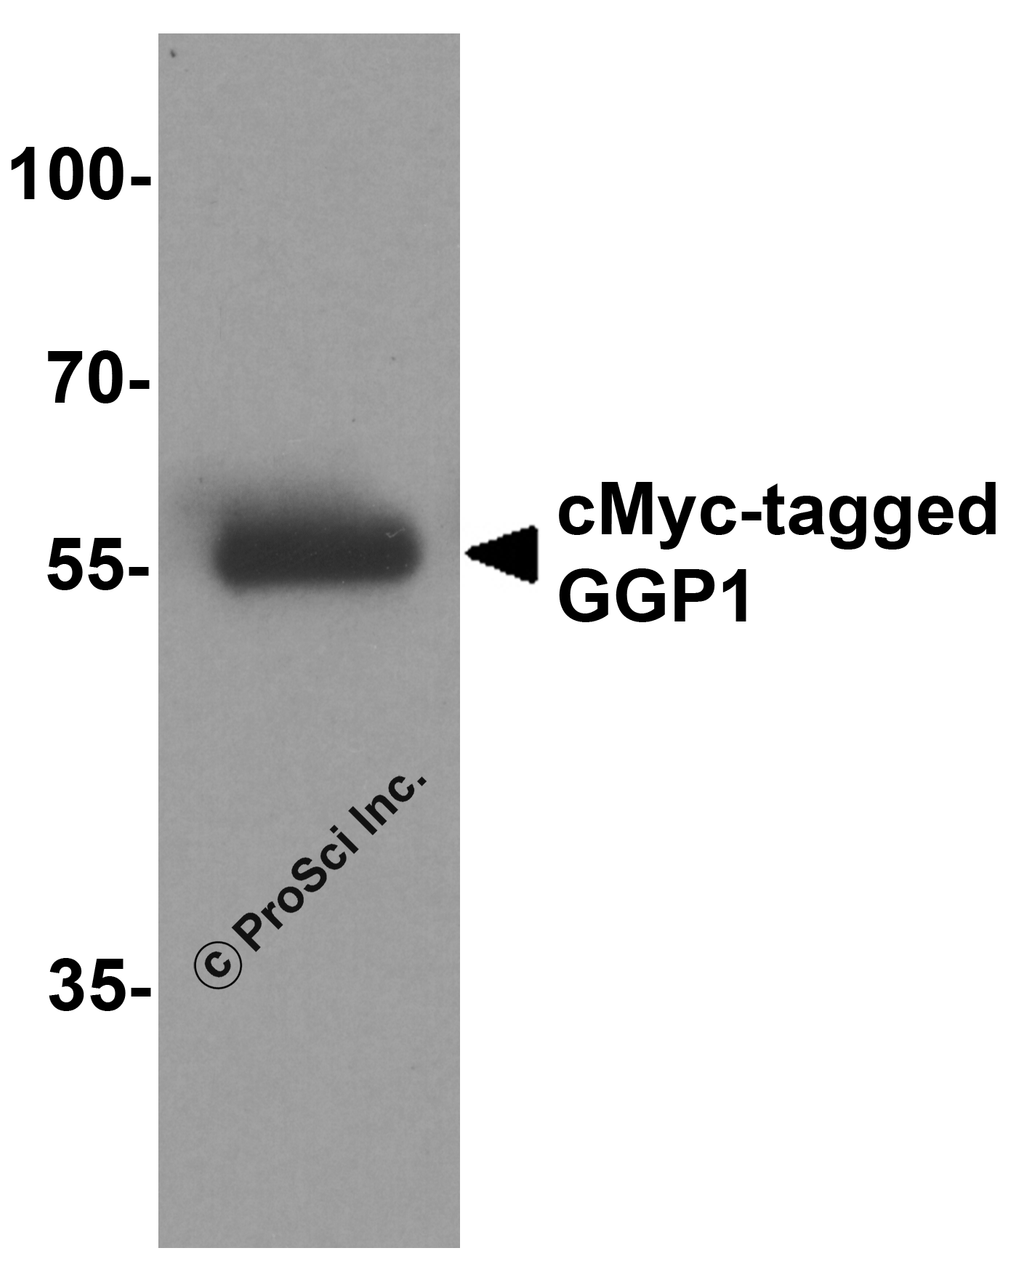 Western blot analysis of 20ng of cMyc-tagged recombinant GGP1 protein using 1 ug of cMyc antibody to immunoprecipitate and 1 ug/ml anti-GGP1 antibody to detect.